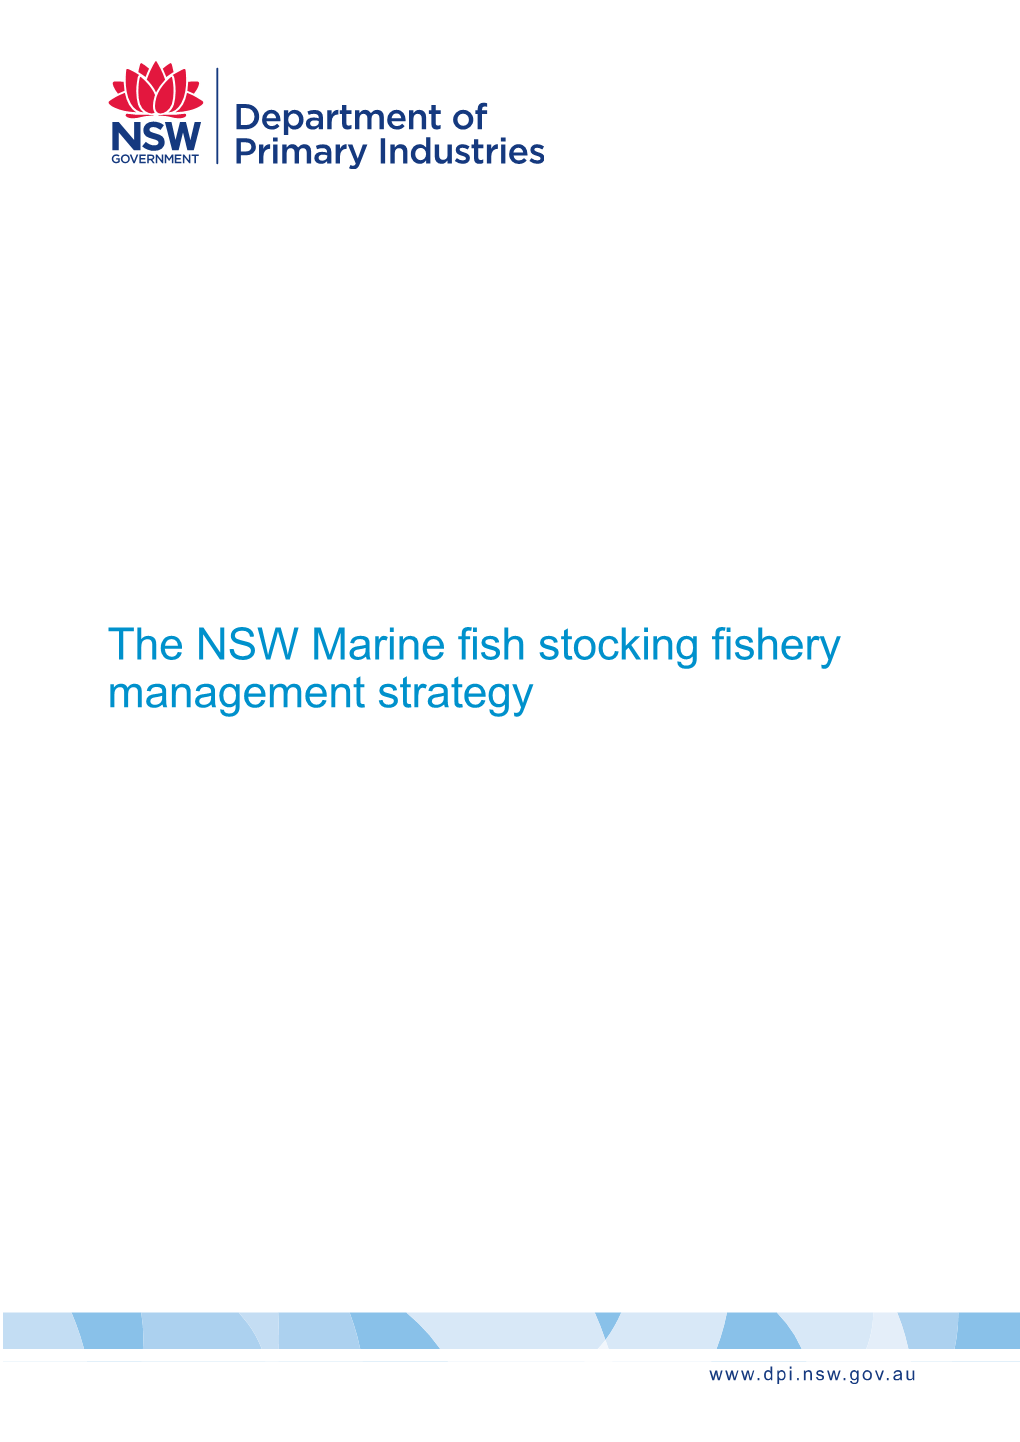 Marine Fish Stocking Fishery Management Strategy